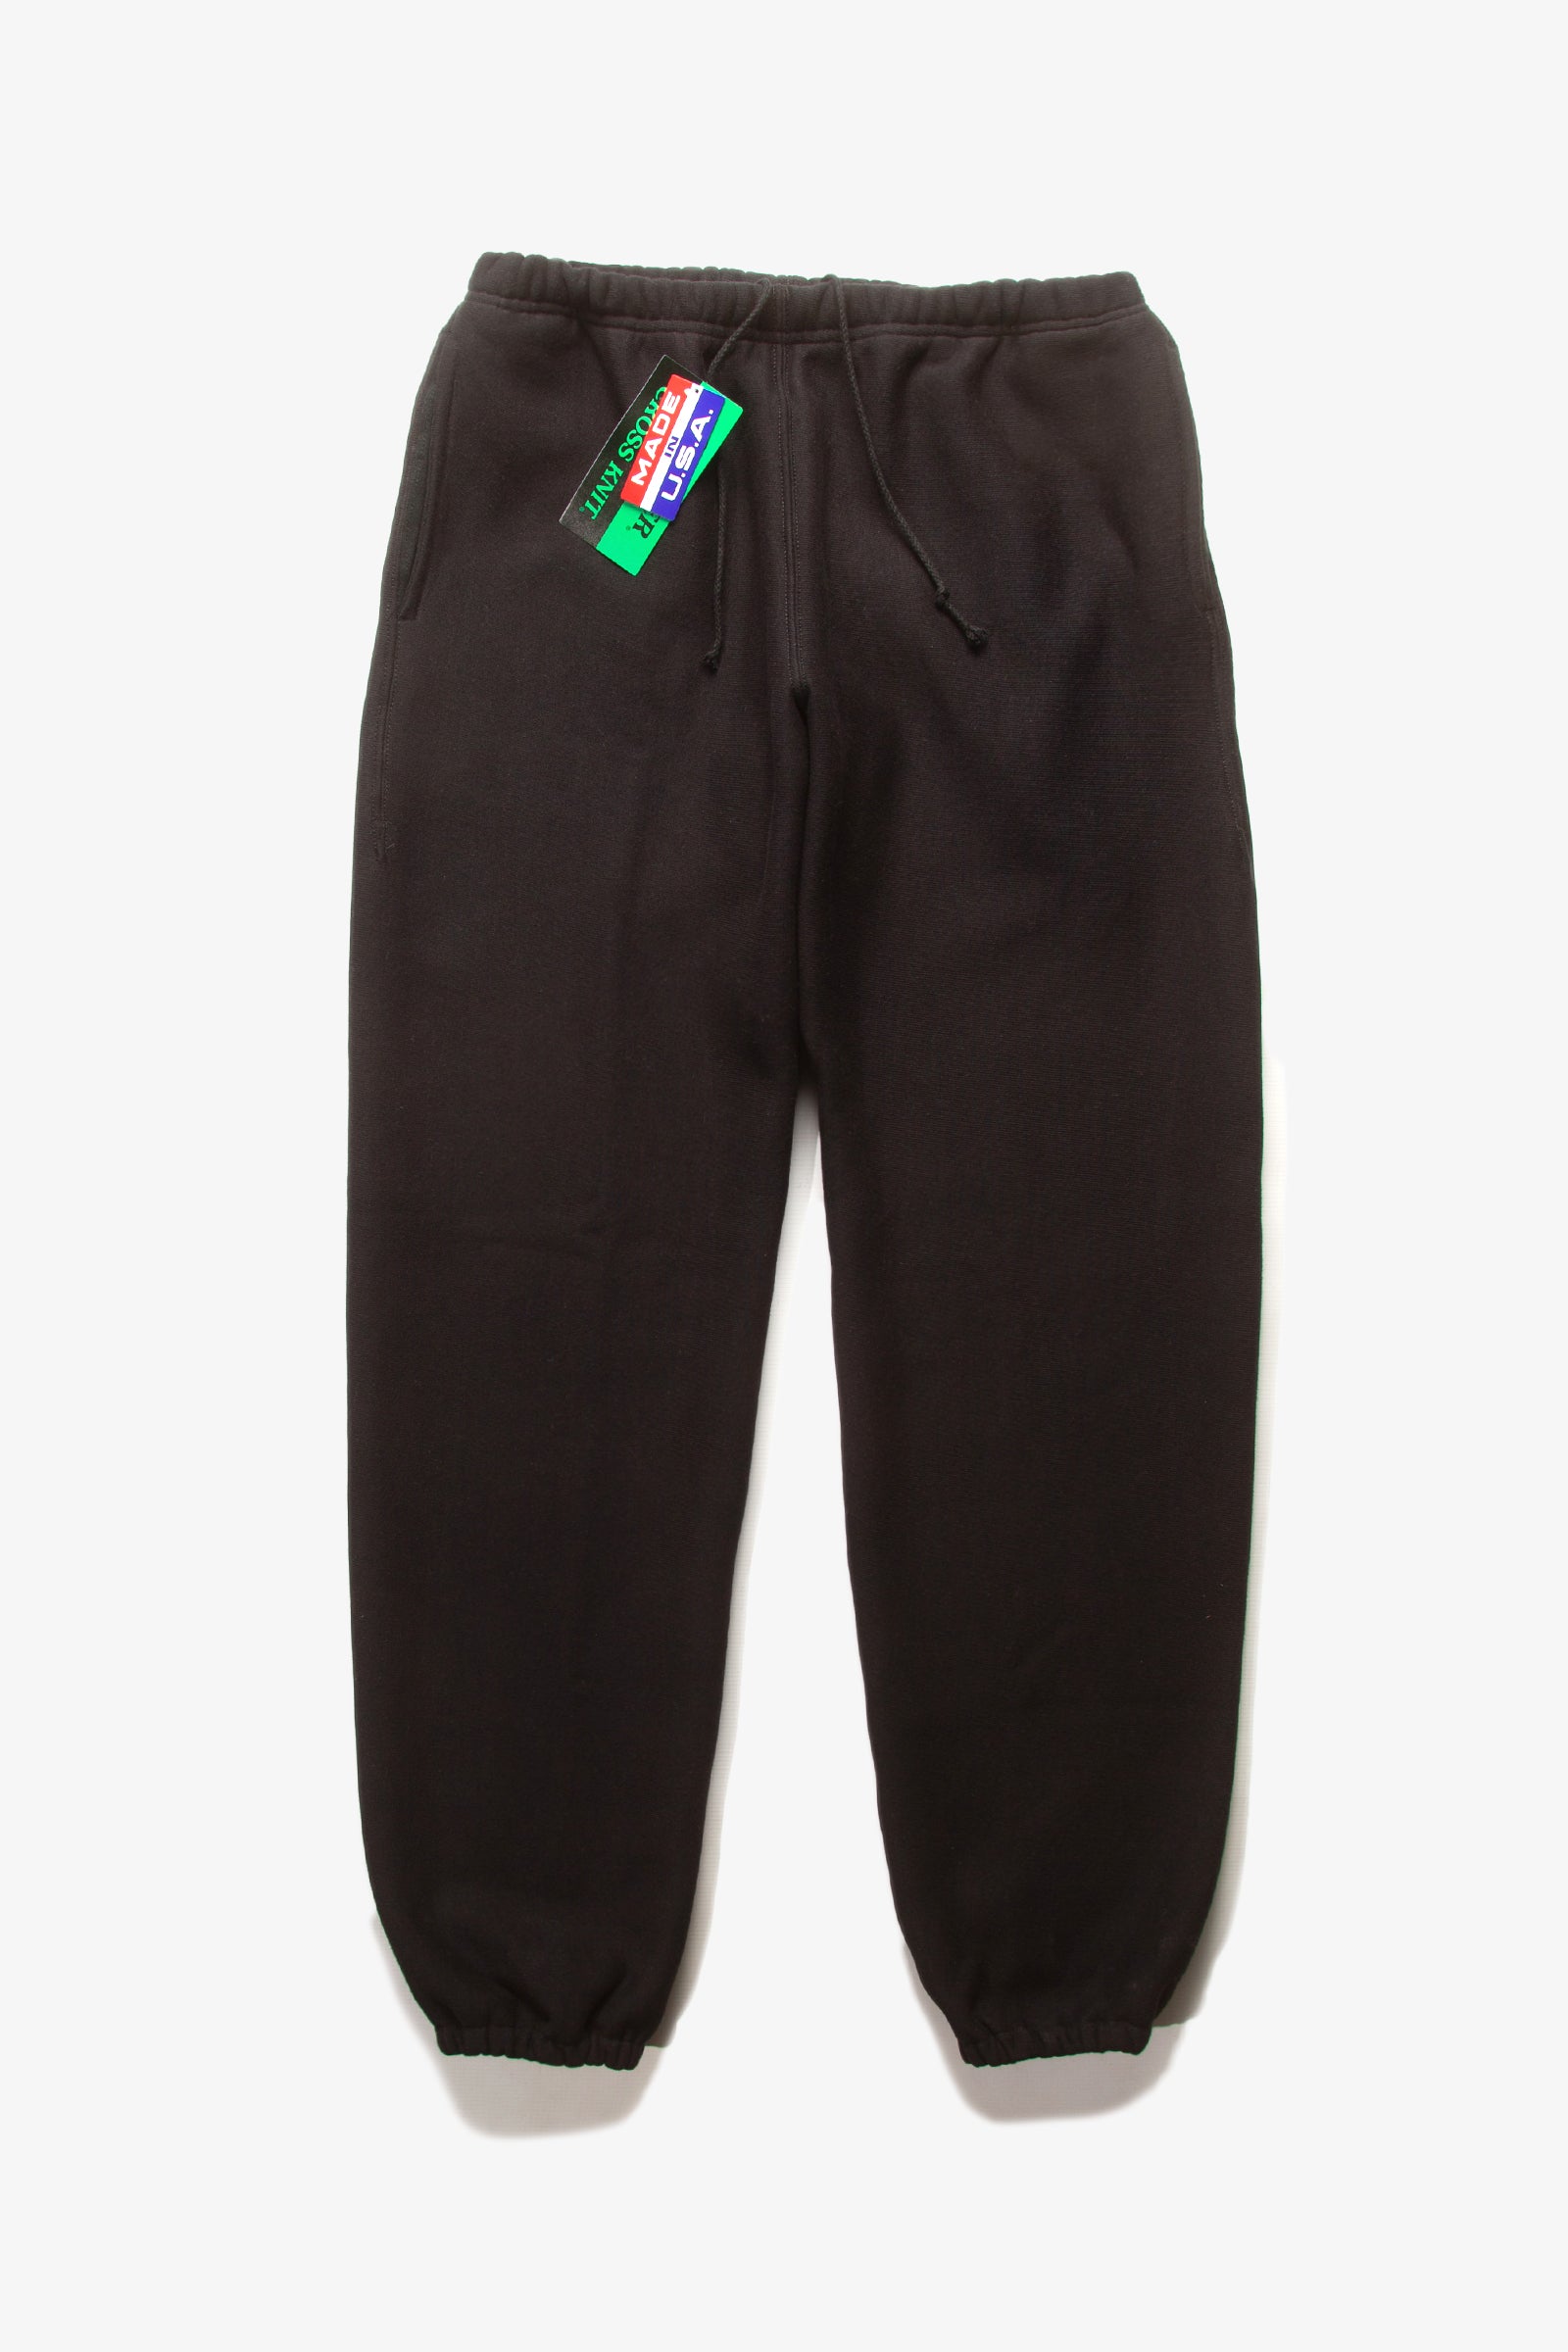 Camber USA - 233 12oz Sweatpants - Black | Blacksmith Store